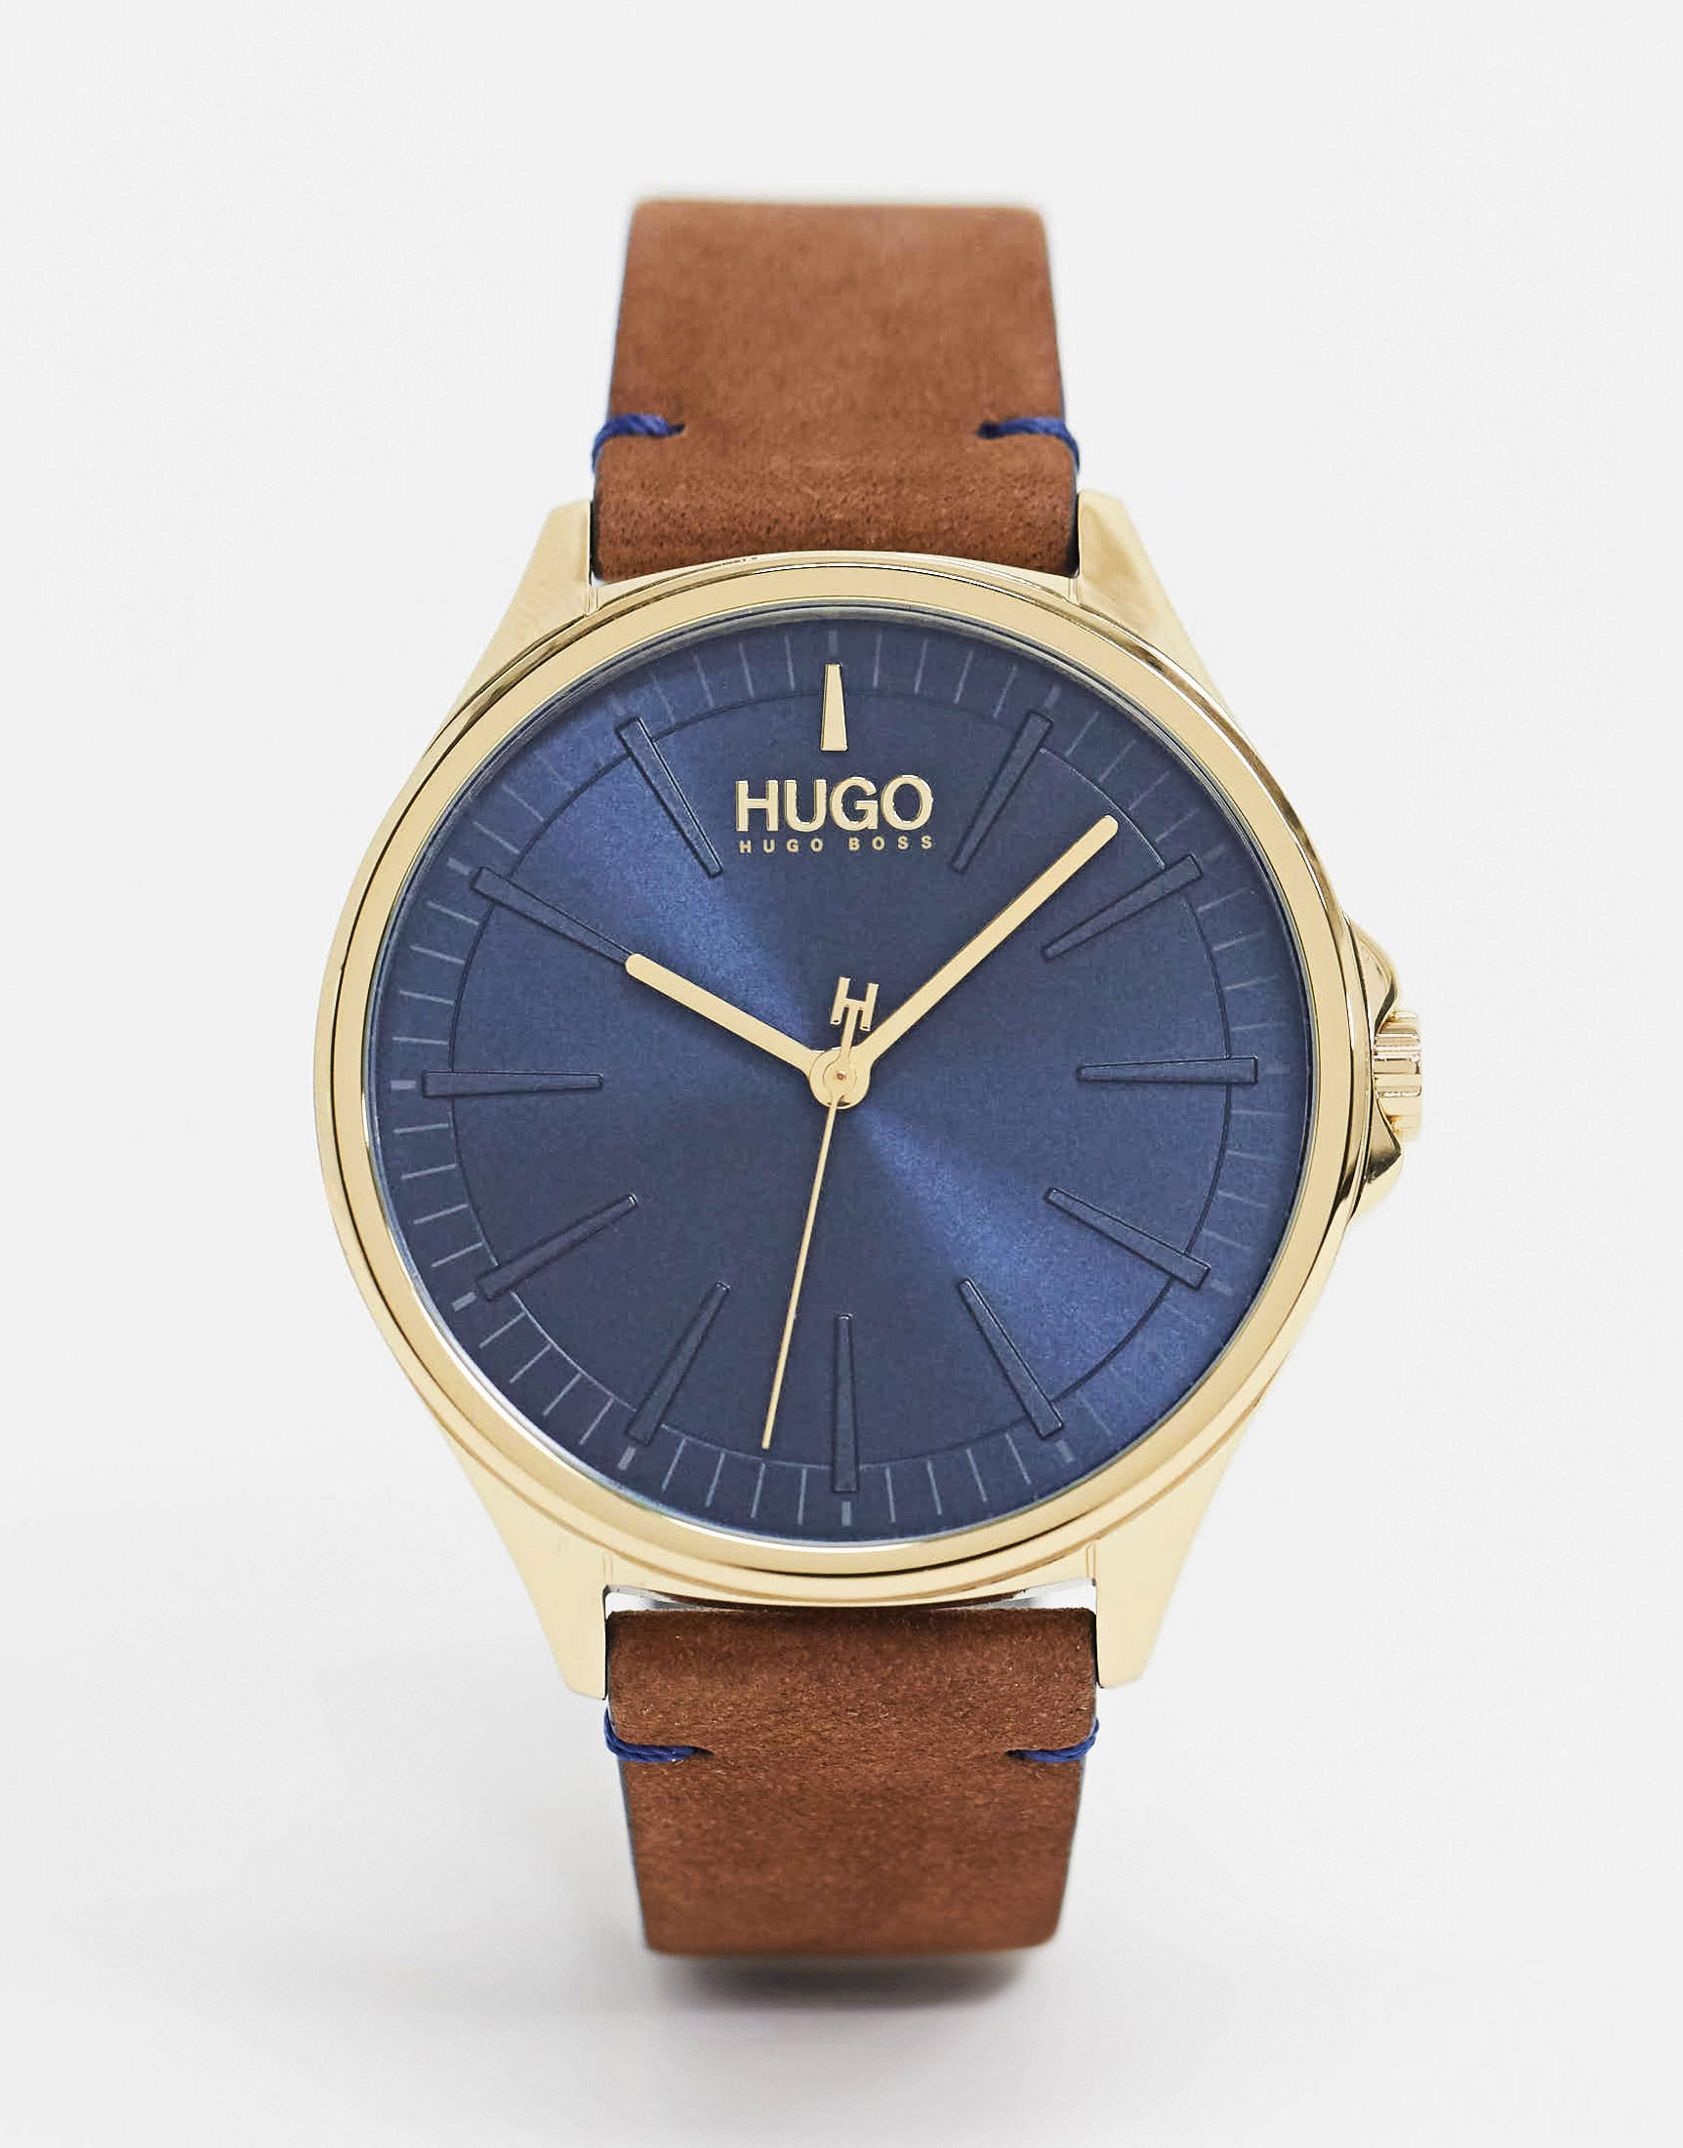 5-year anniversary gifts for boyfriend #2: Hugo smash leather strap watch